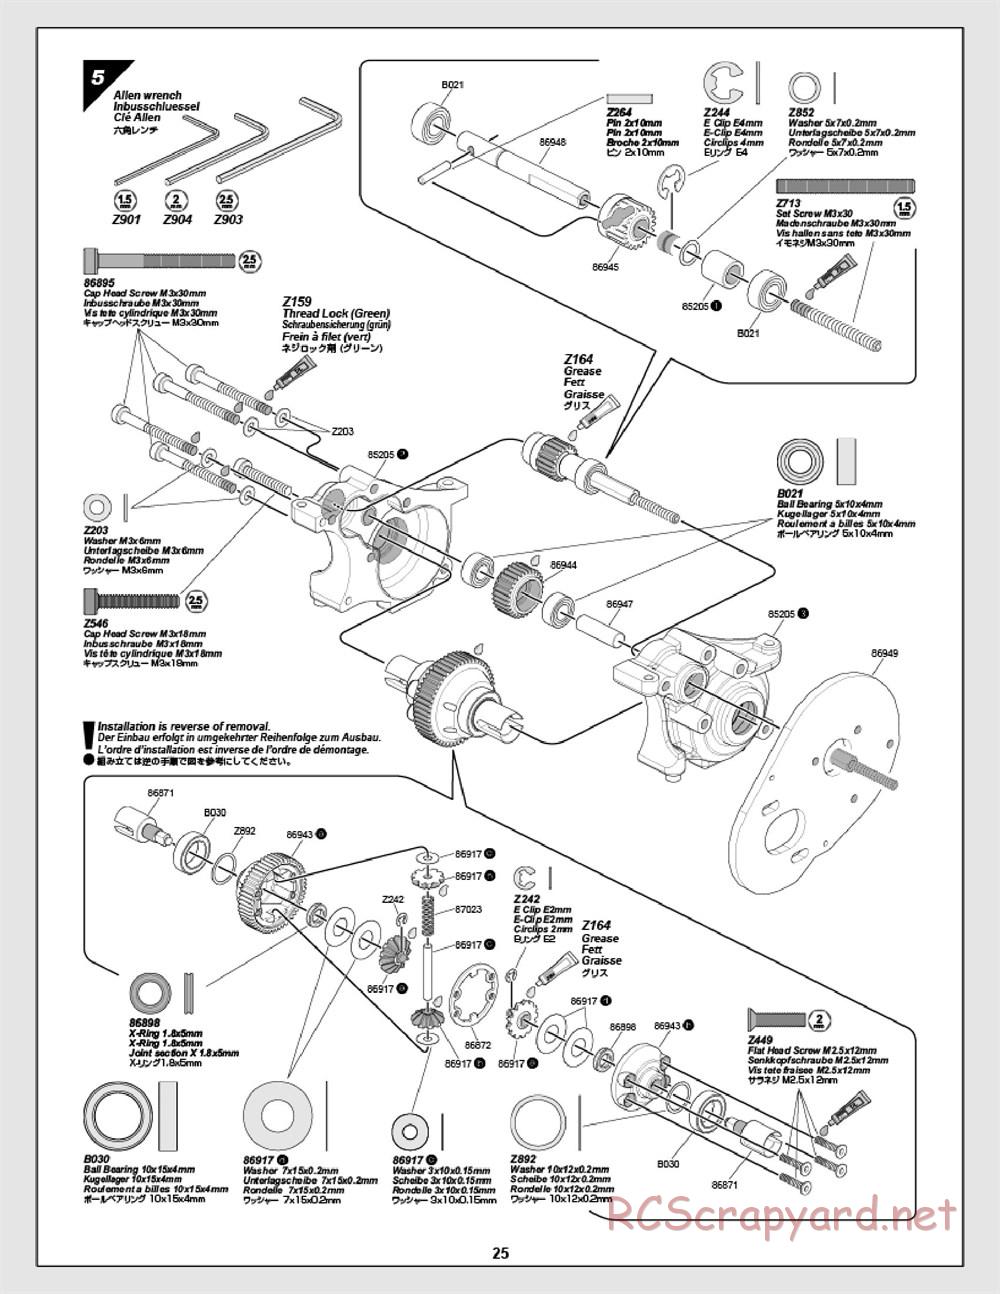 HPI - E-Firestorm 10T Flux - Manual - Page 25